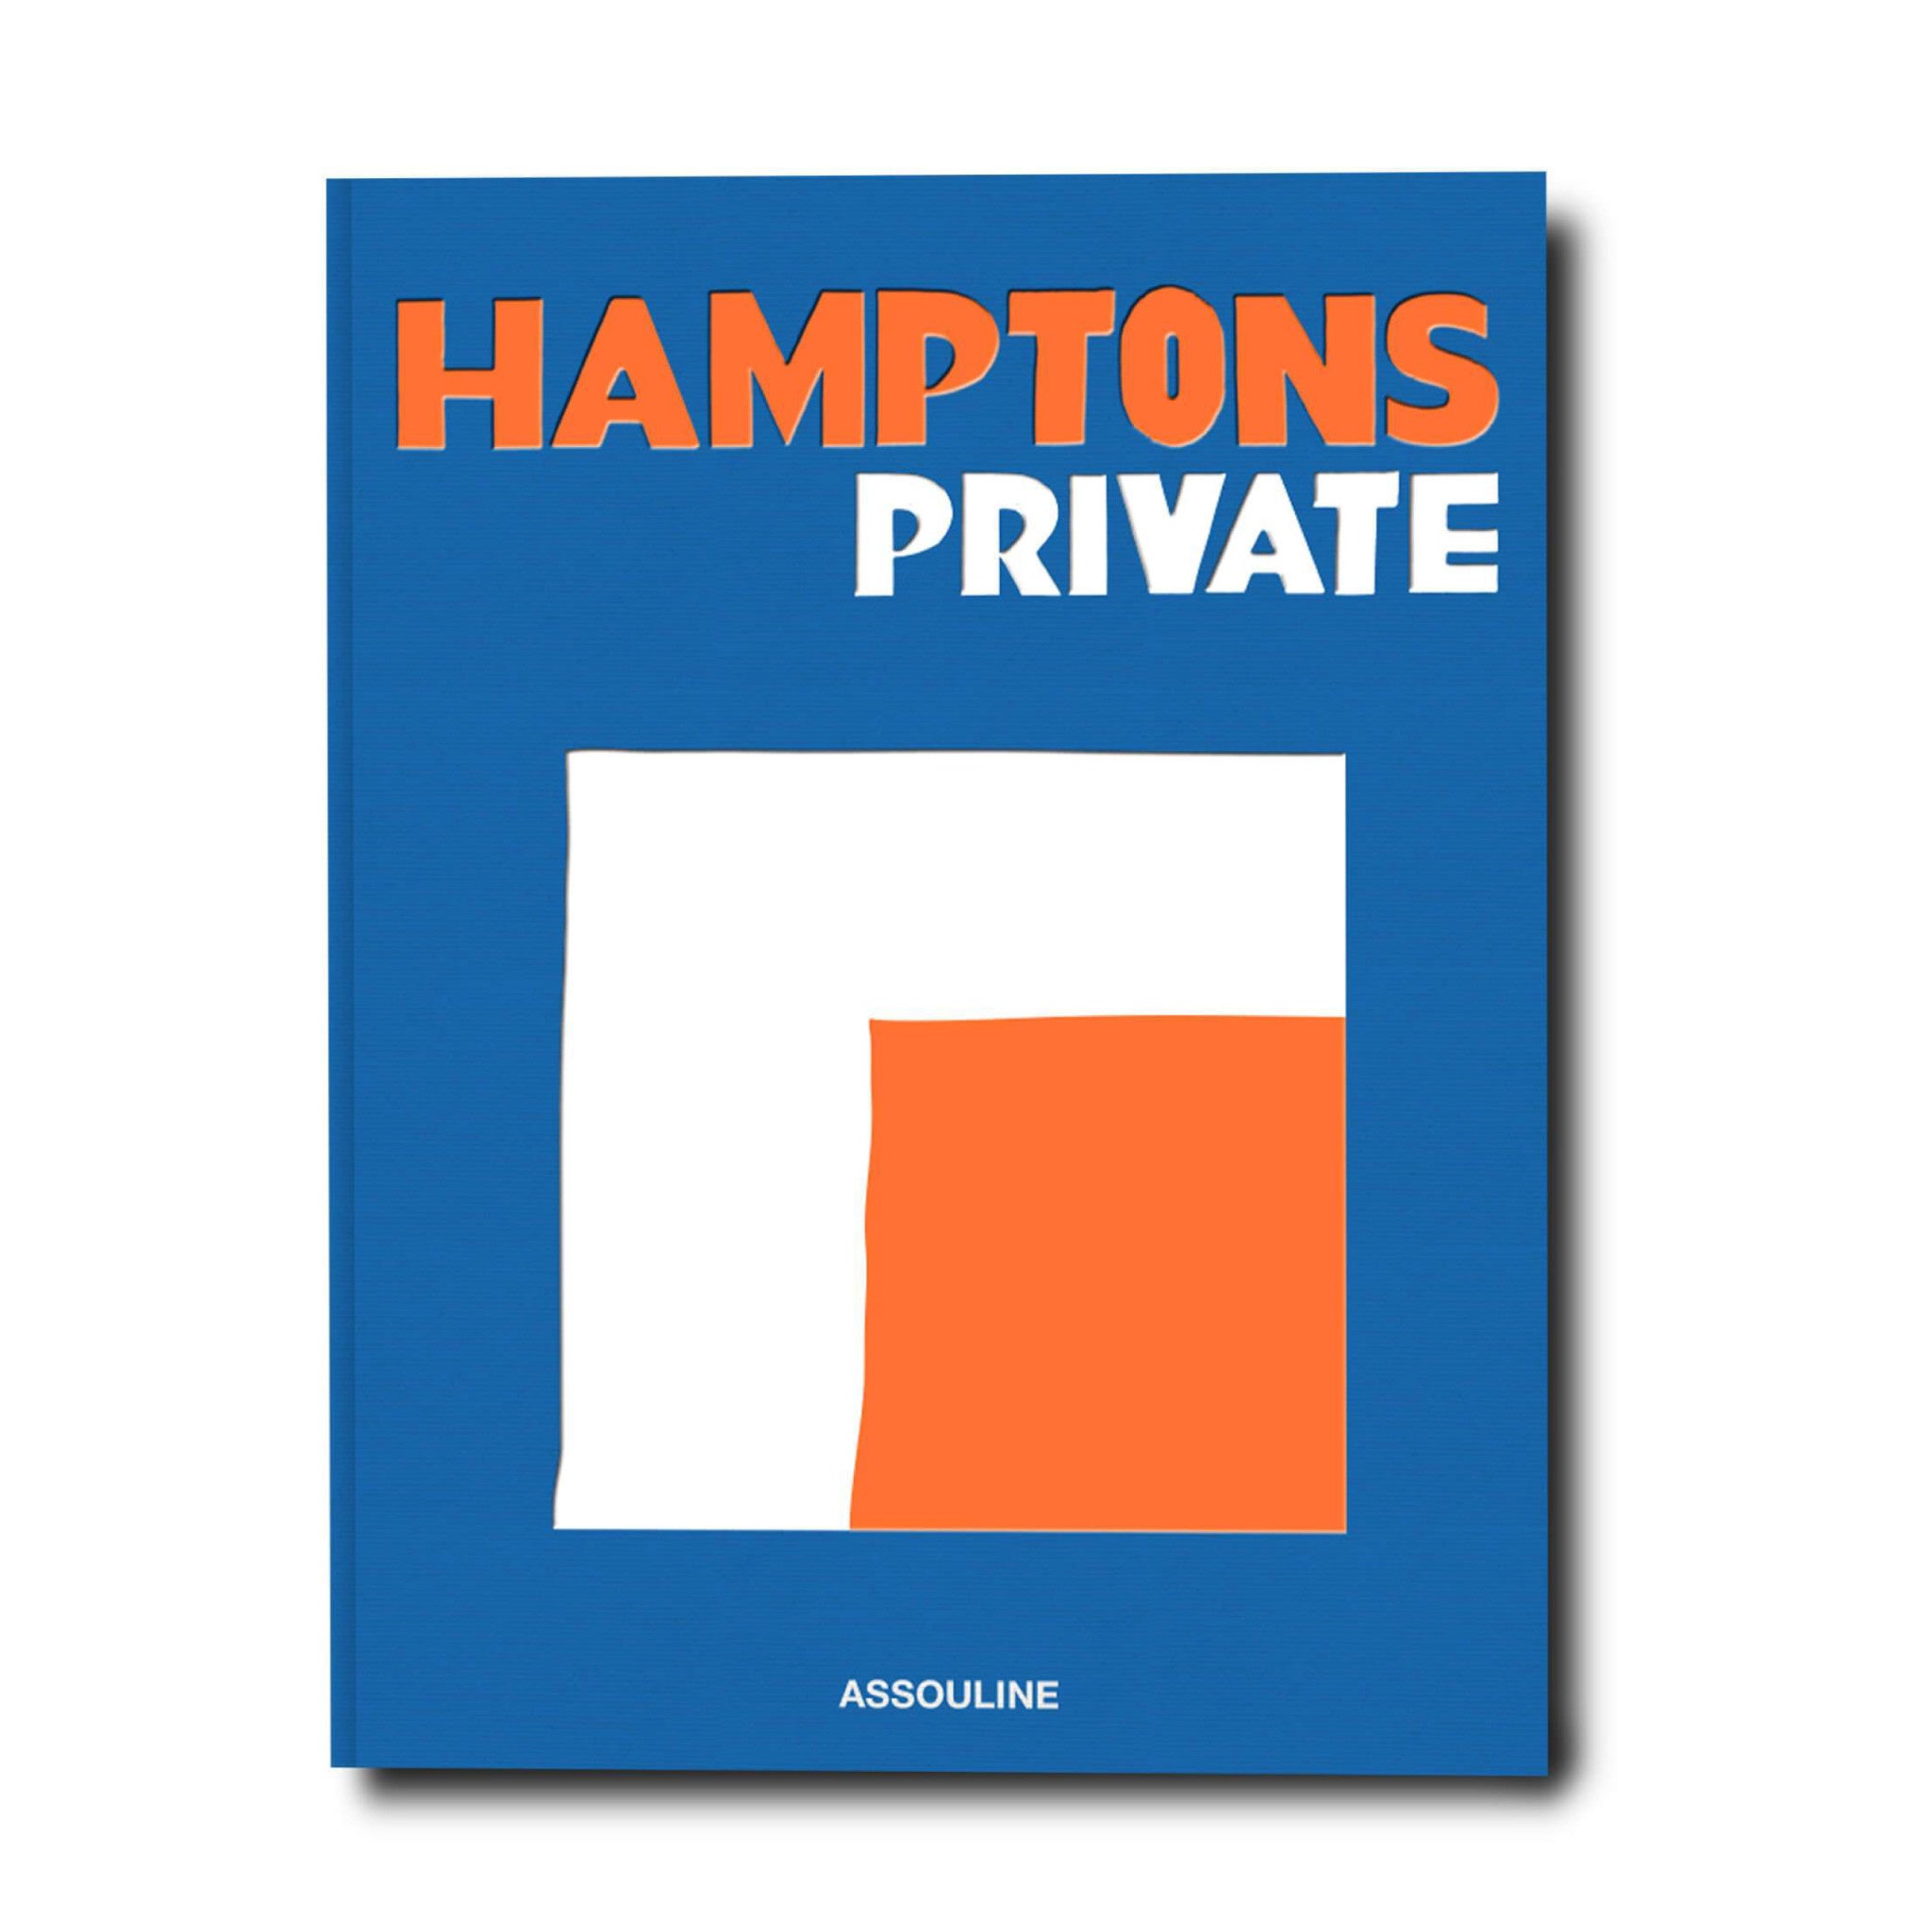 Hamptons Private - Wynwood Walls Shop